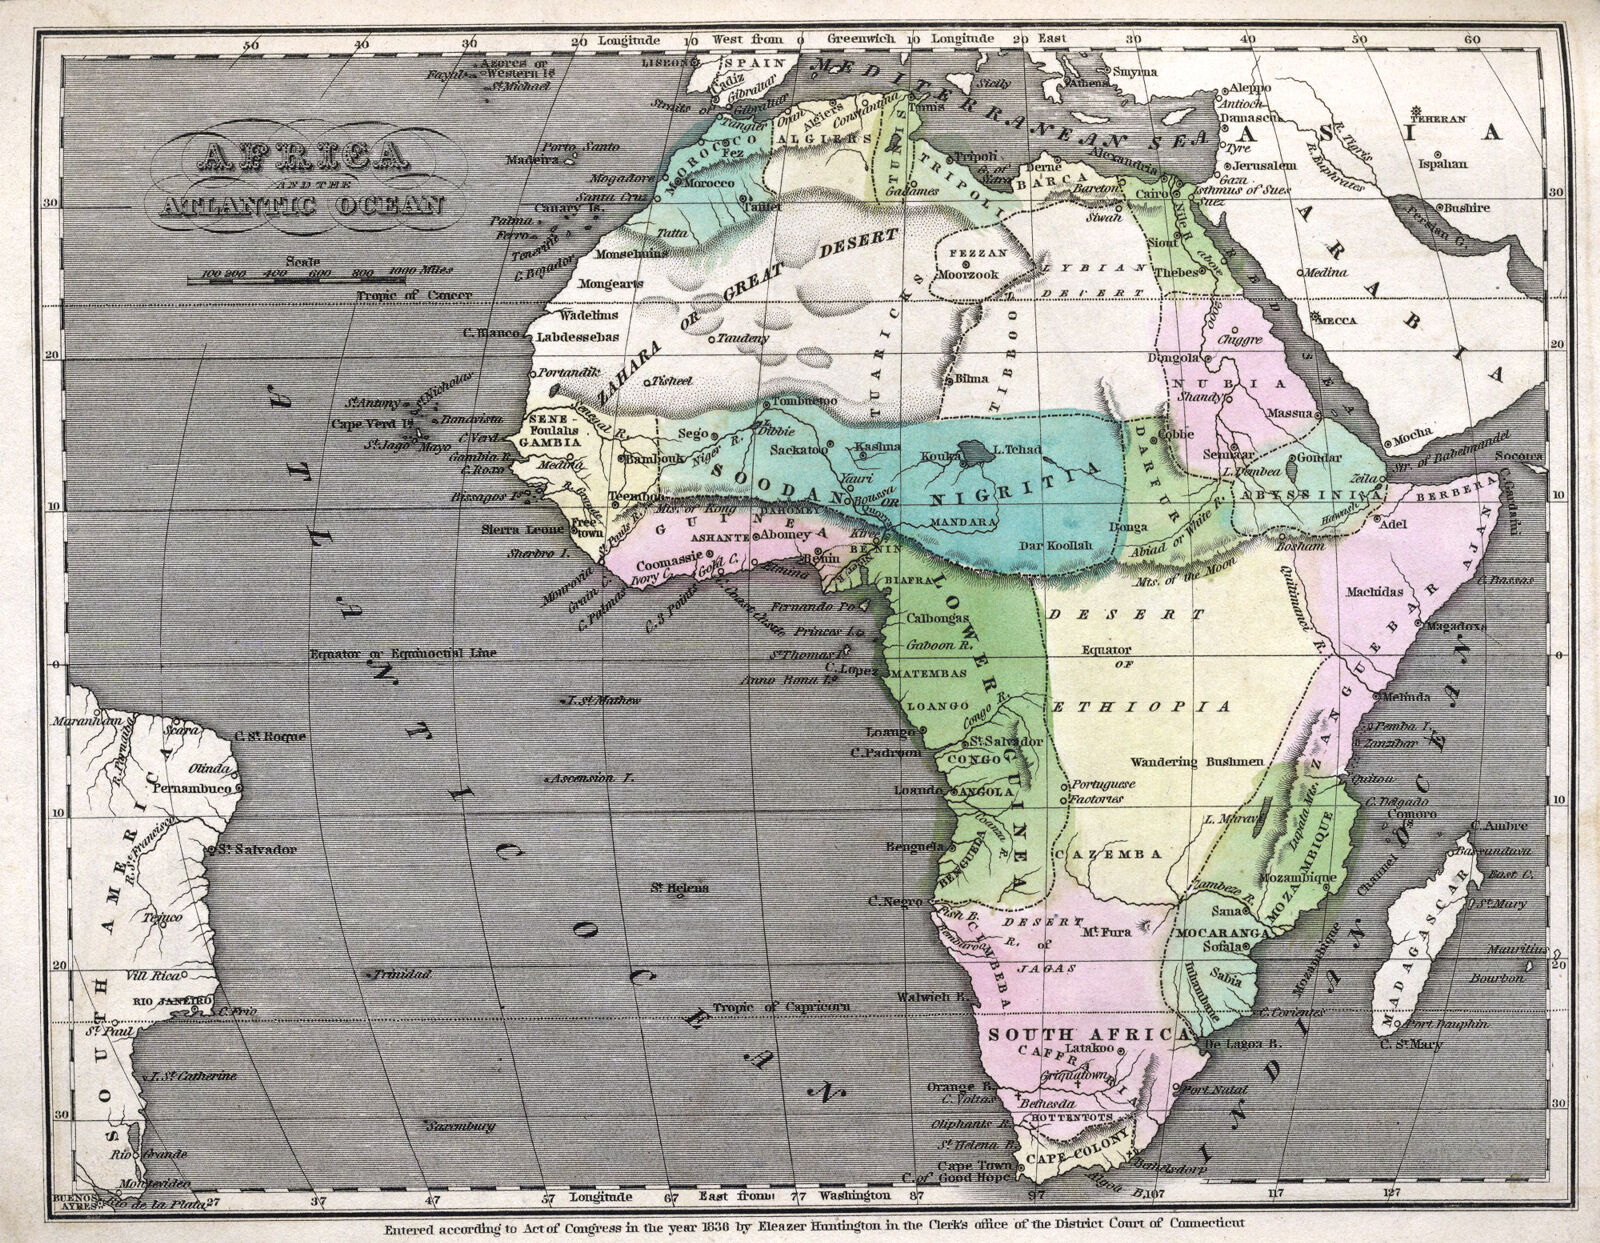 Africa and the Atlantic Ocean